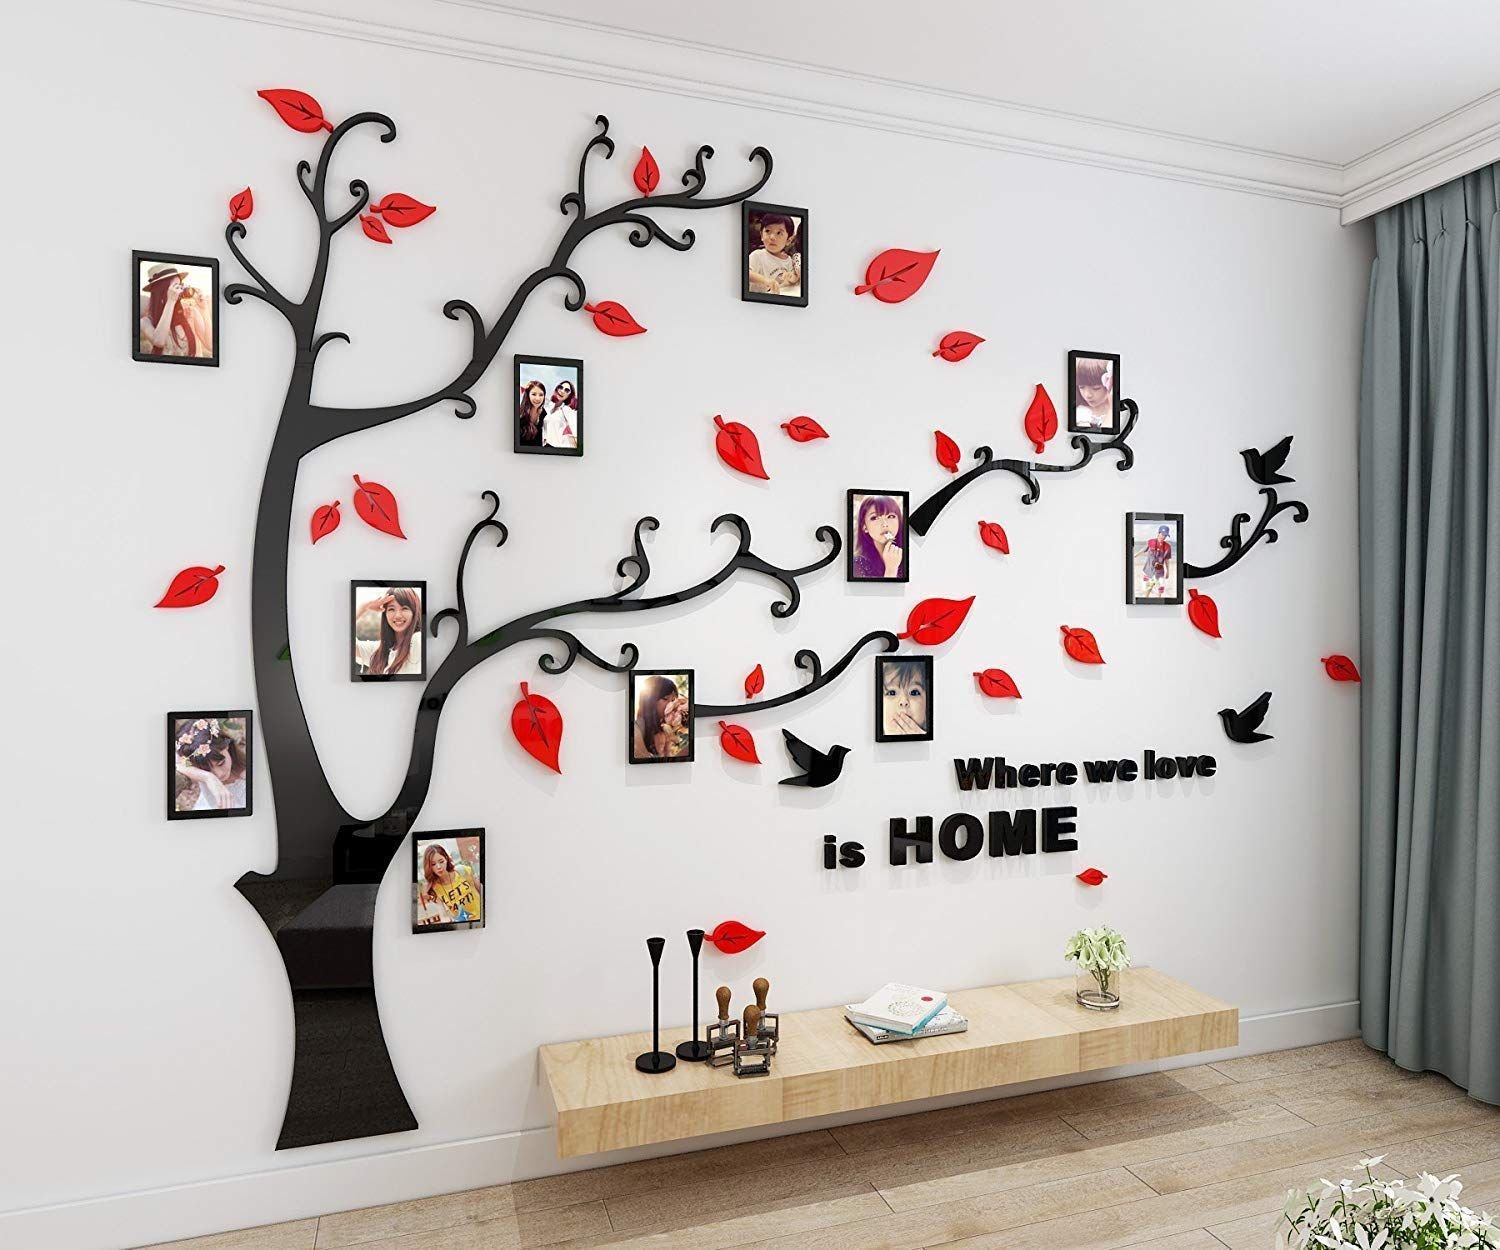 Нарисованное дерево на стене с фотографиями